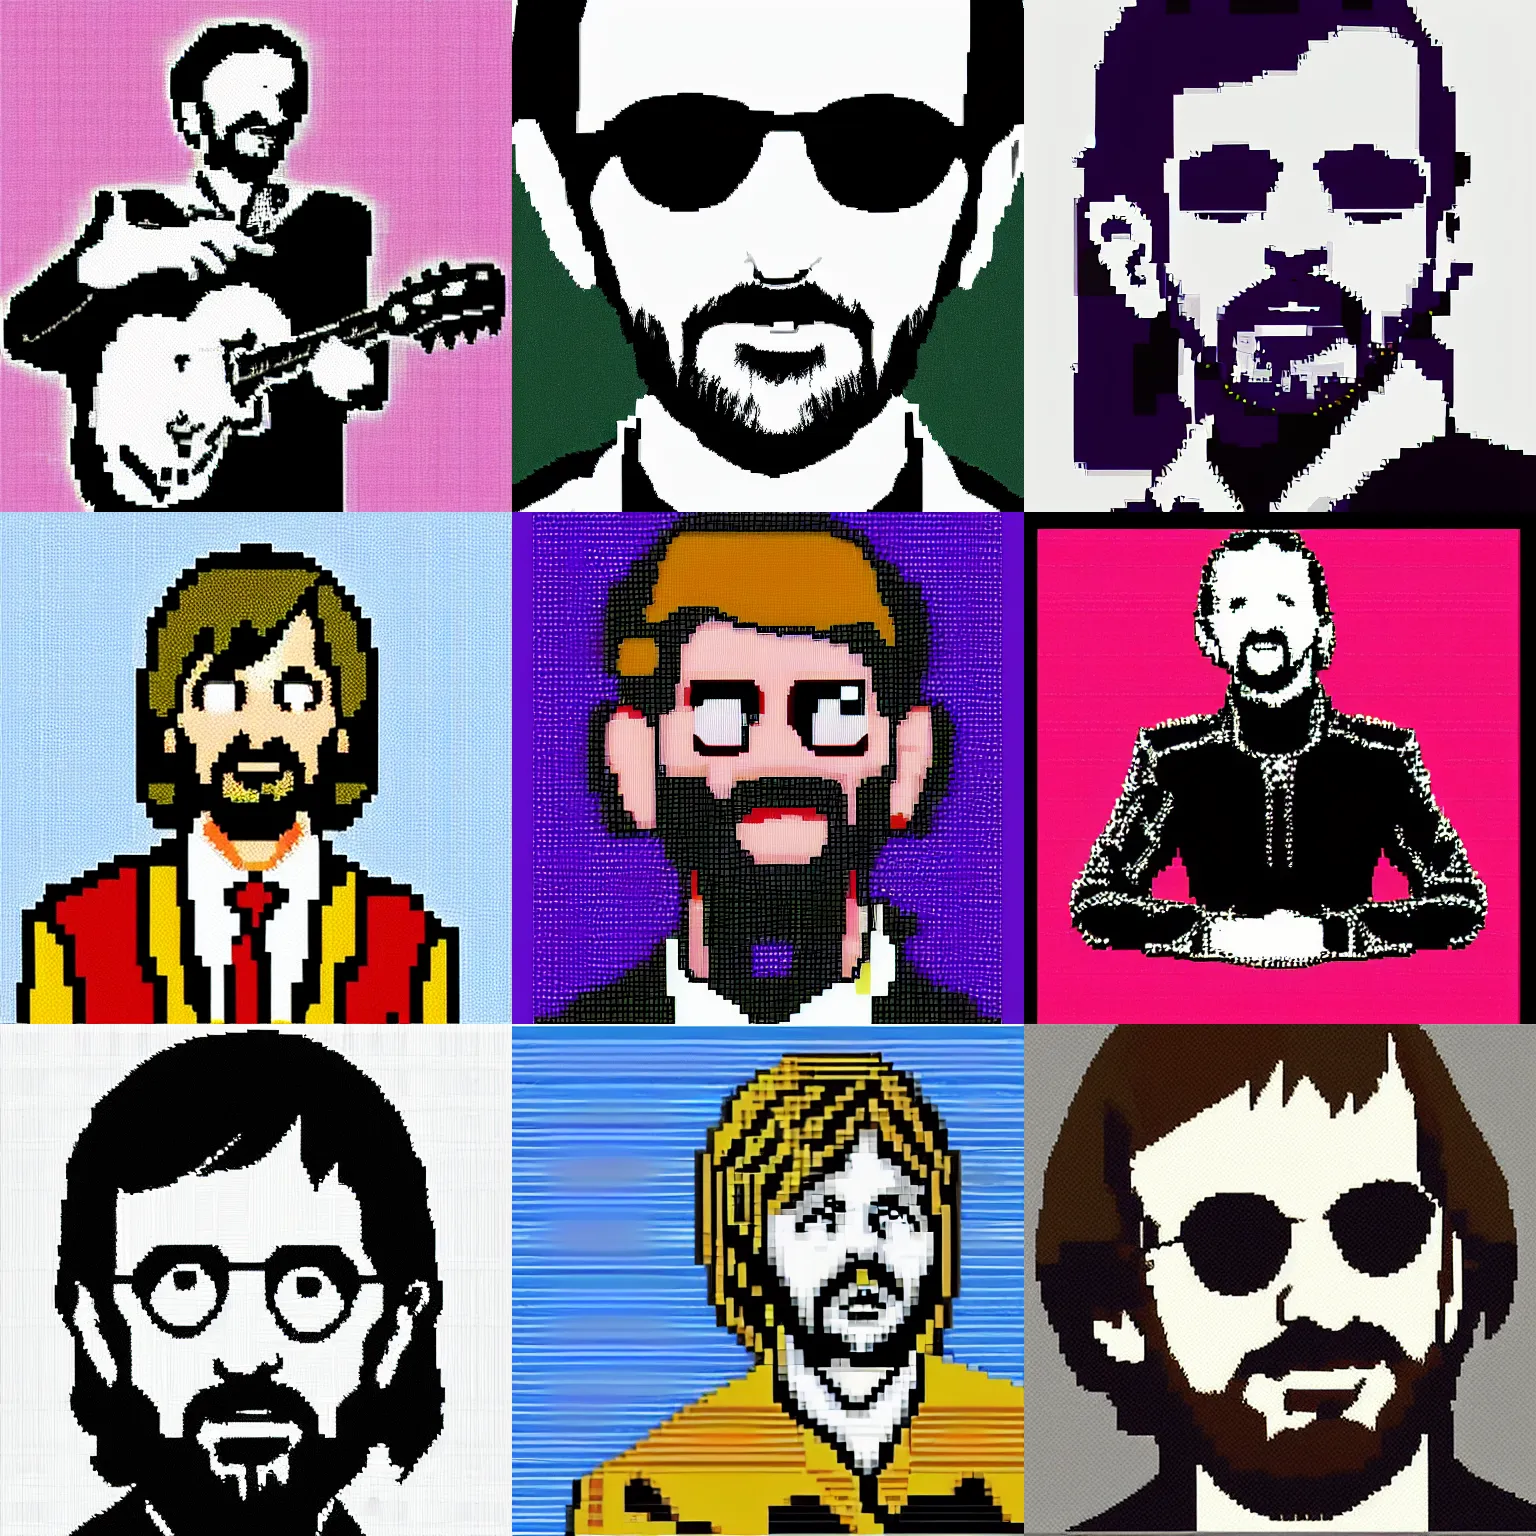 Prompt: detailed pixel art of Ringo Starr